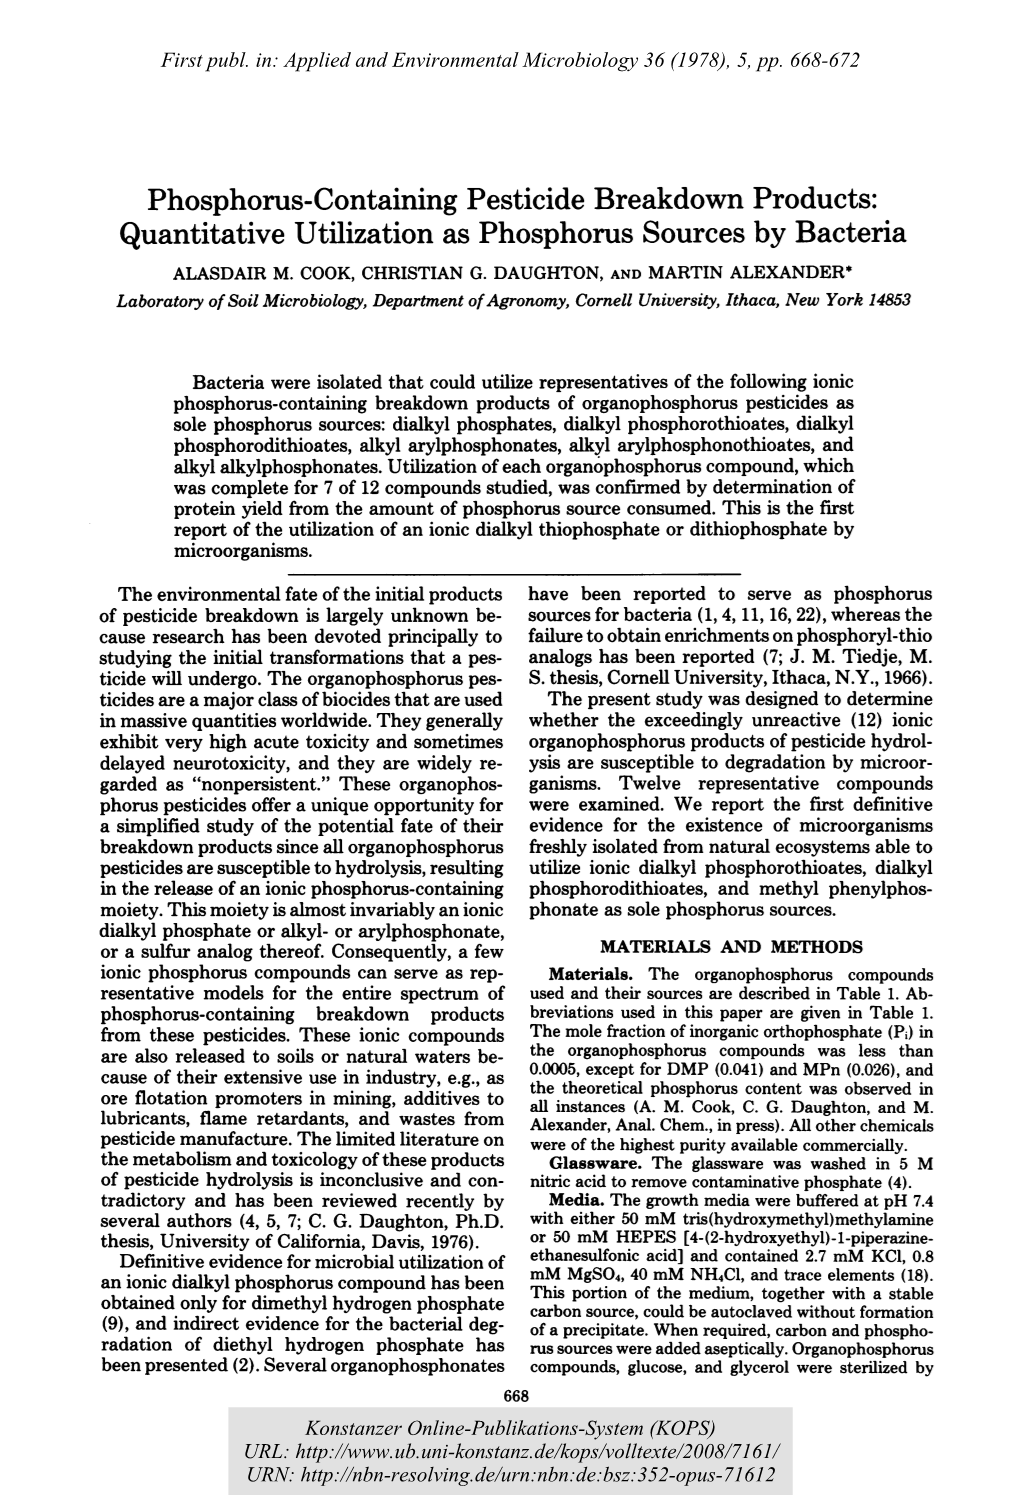 Phosphorus-Containing Pesticide Breakdown Products: Quantitative Utilization As Phosphorus Sources by Bacteria ALASDAIR M